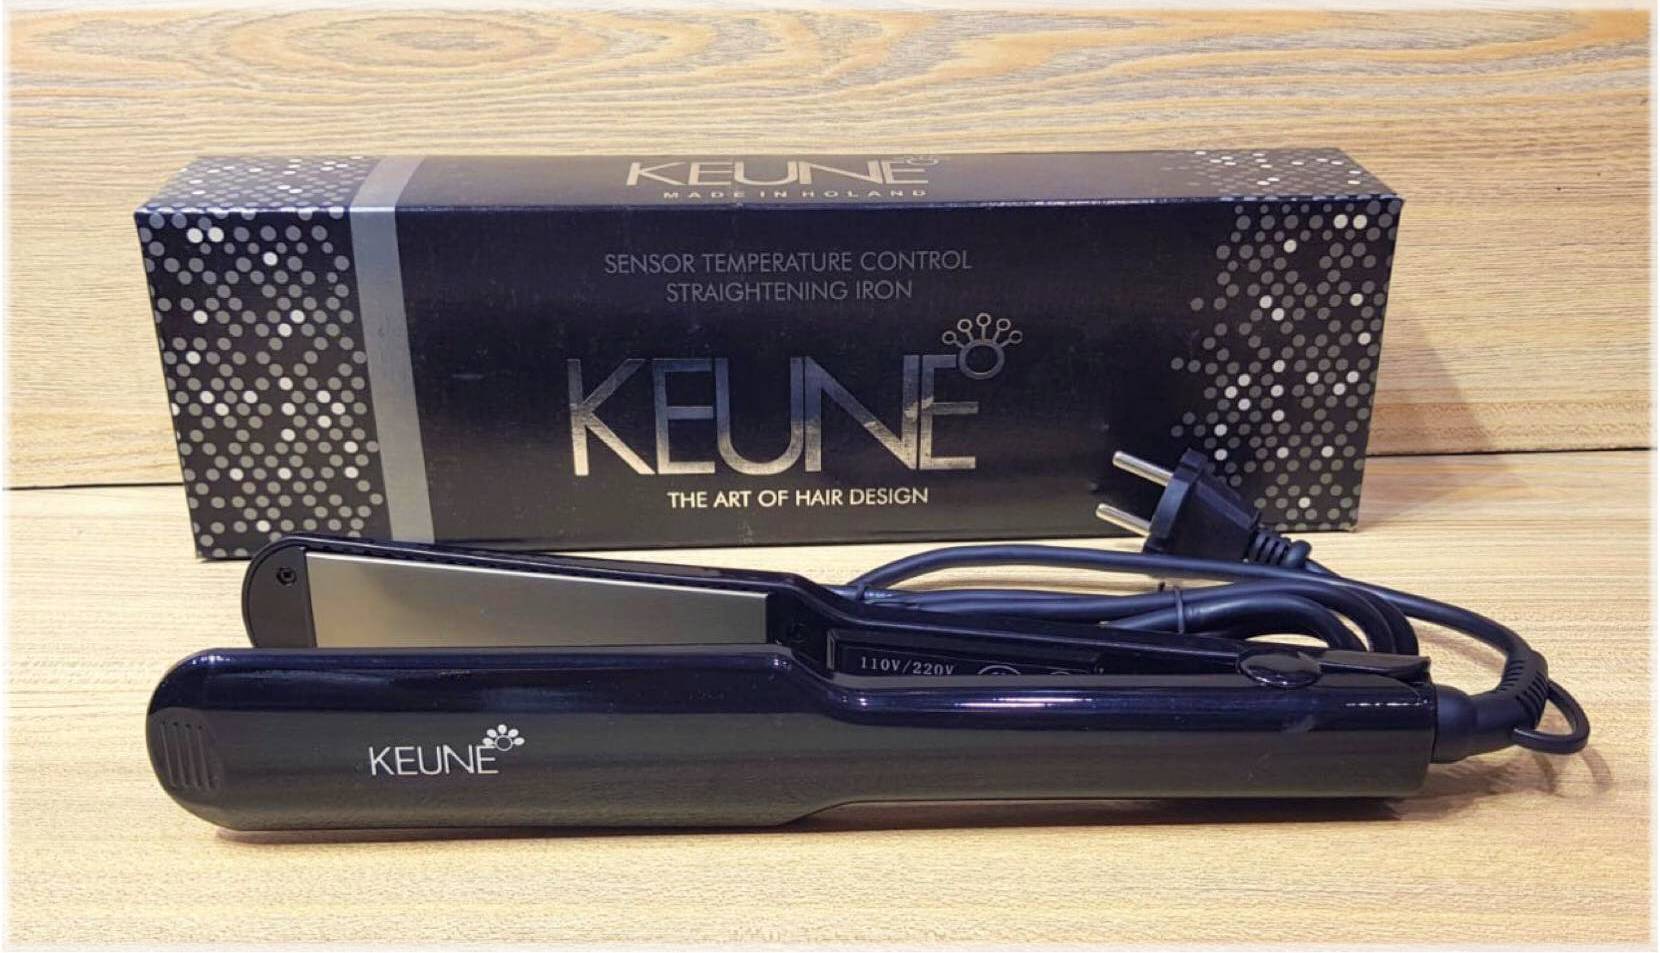 keune - the fashion brand